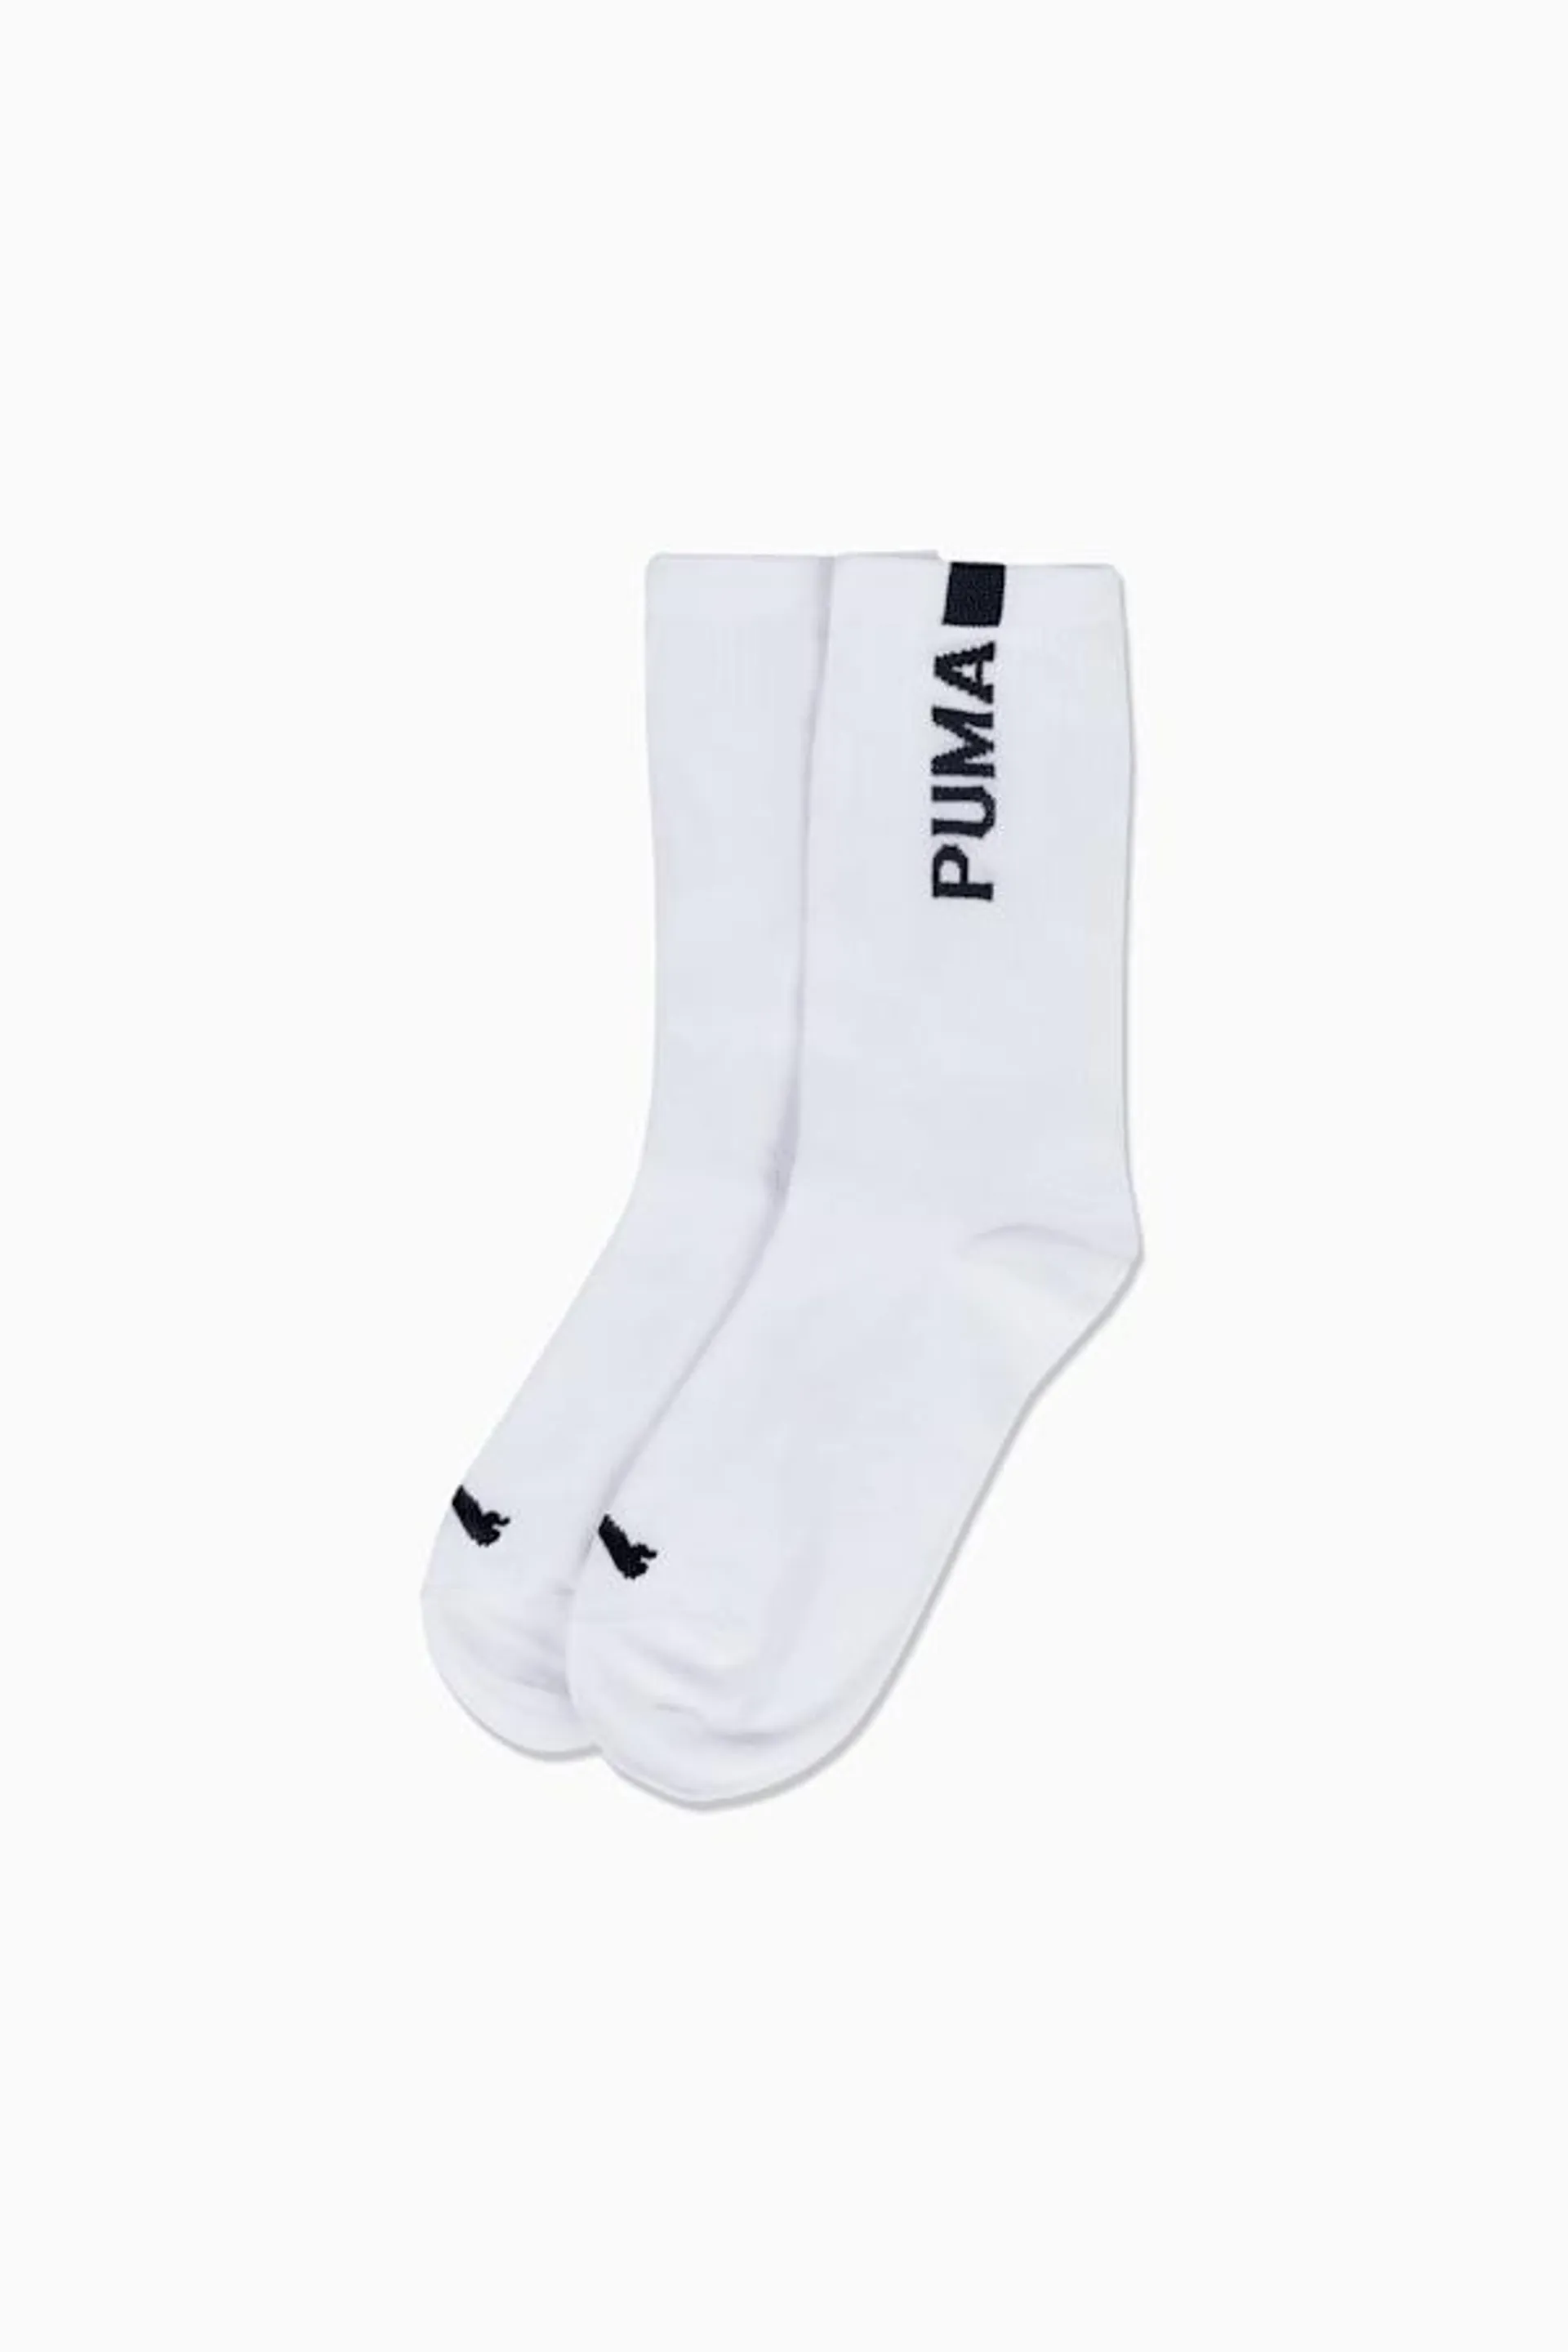 PUMA Women's Slouch Socks 2 Pack